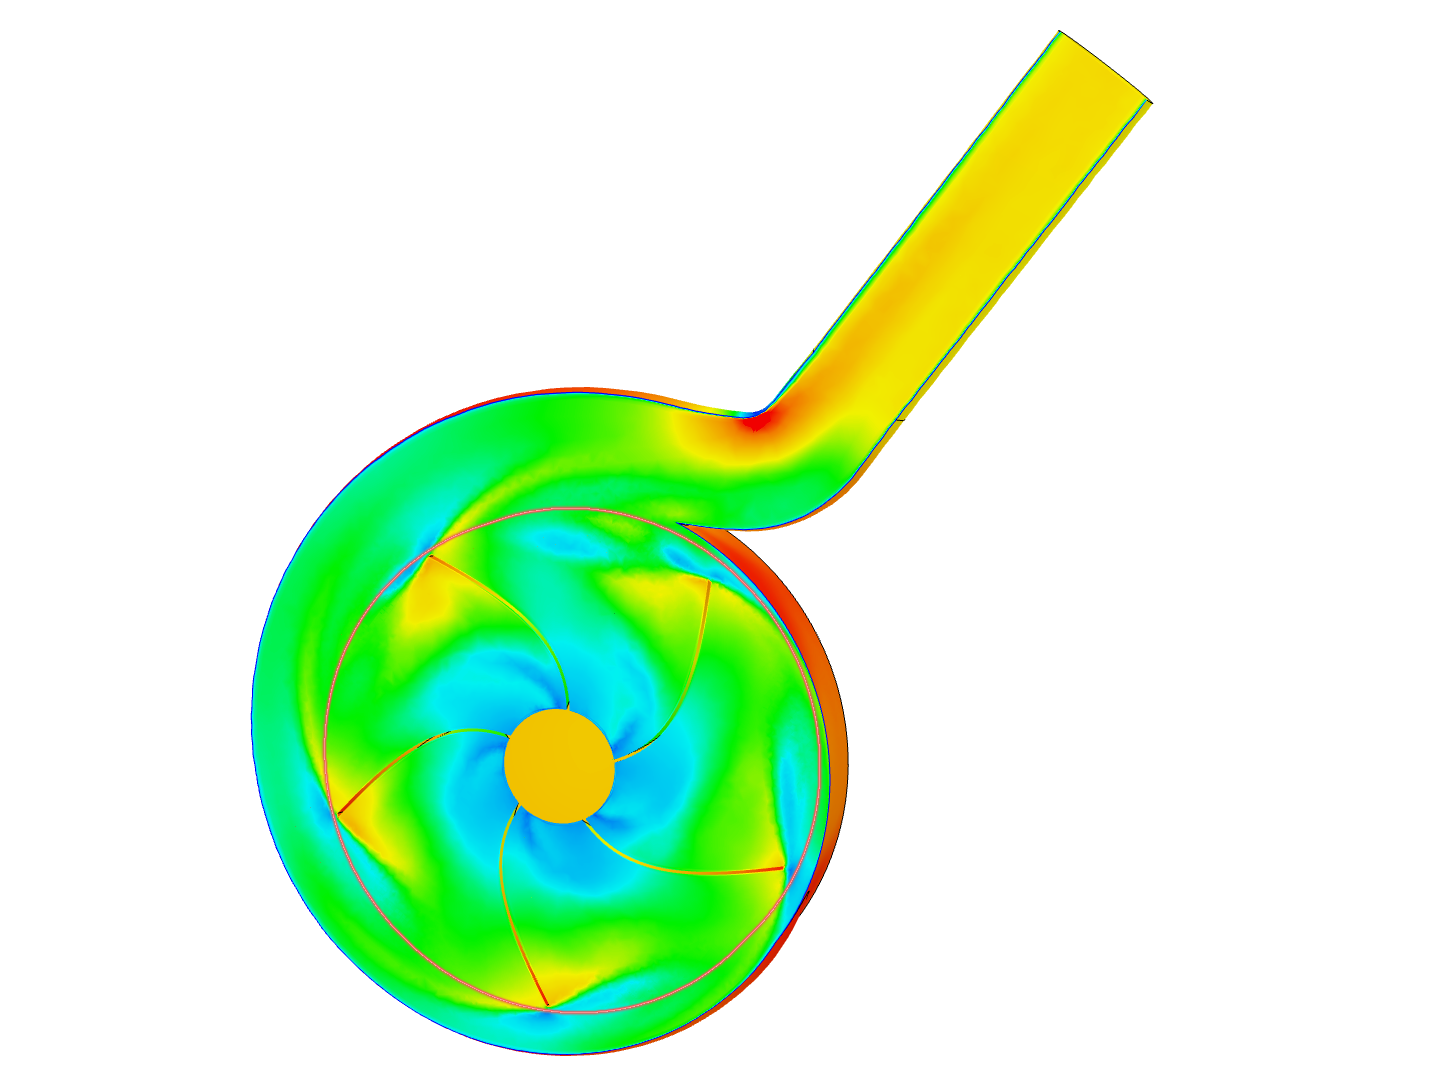 Centrifugal pump simulation - coursera image